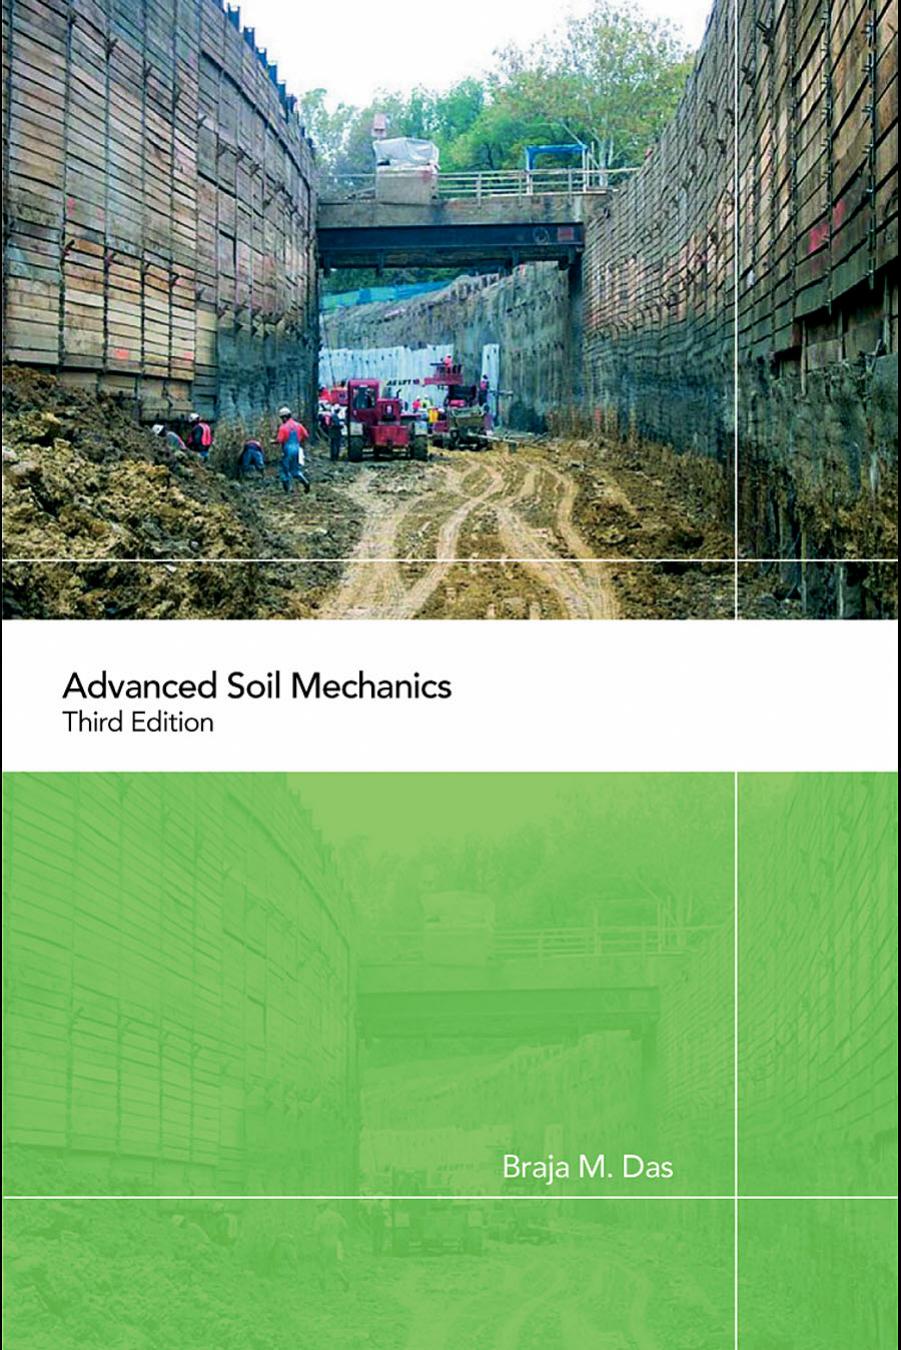 Advanced Soil Mechanics, Third edition